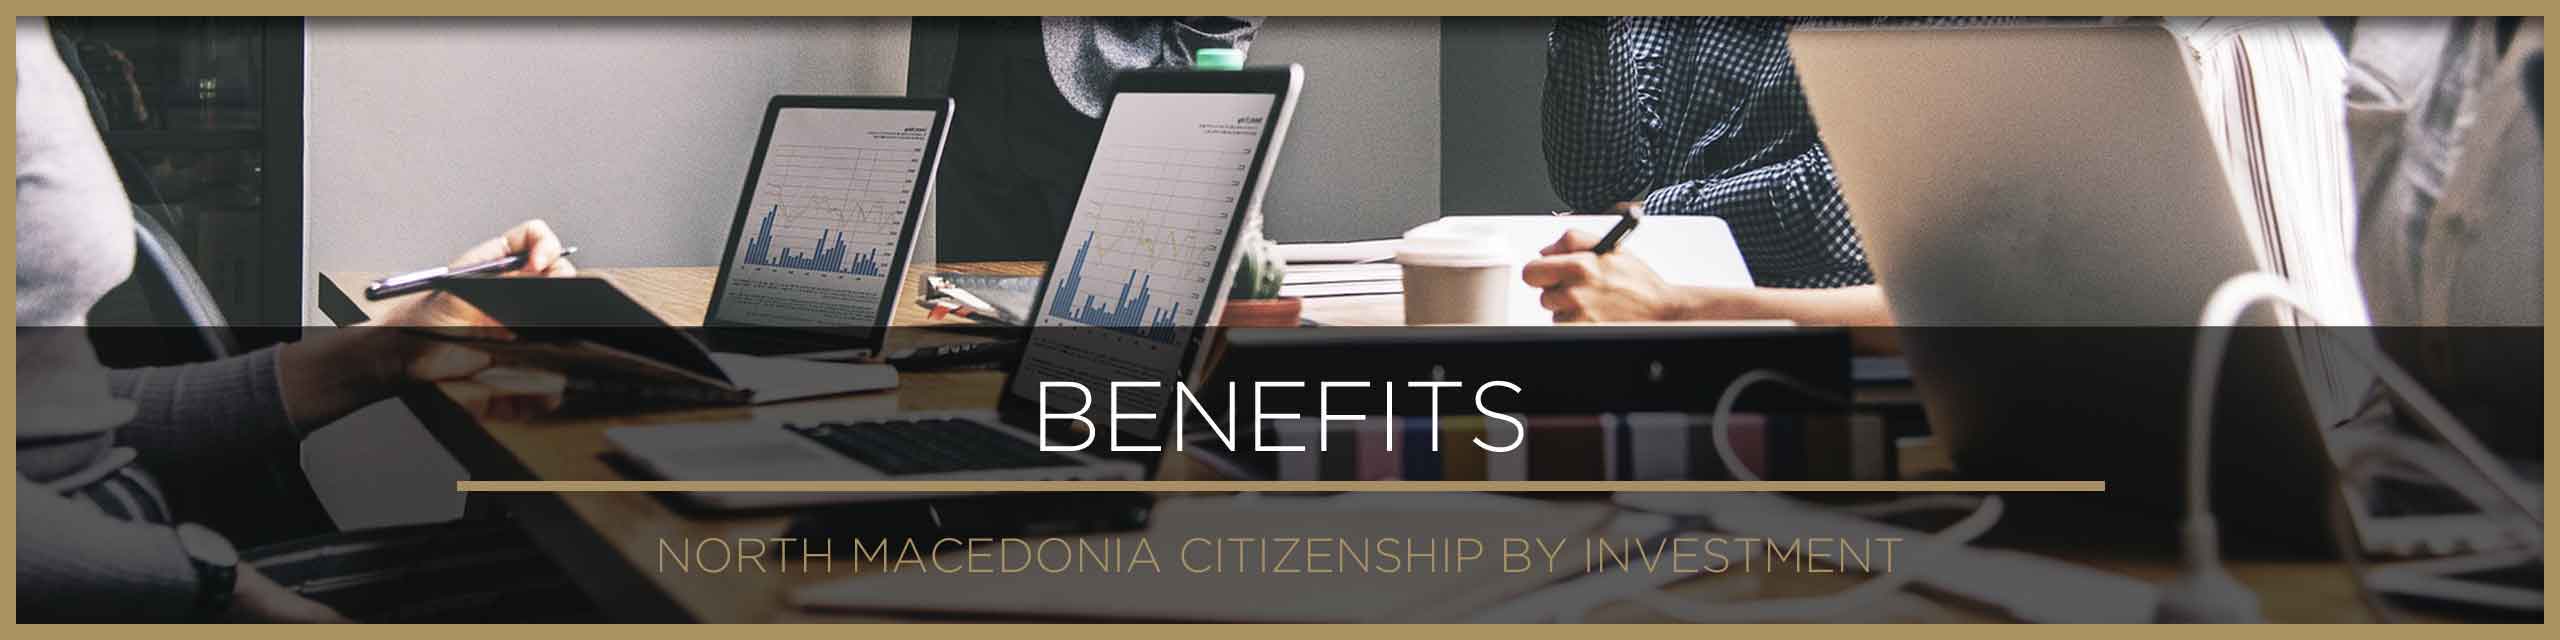 North Macedonia citizenship benefits